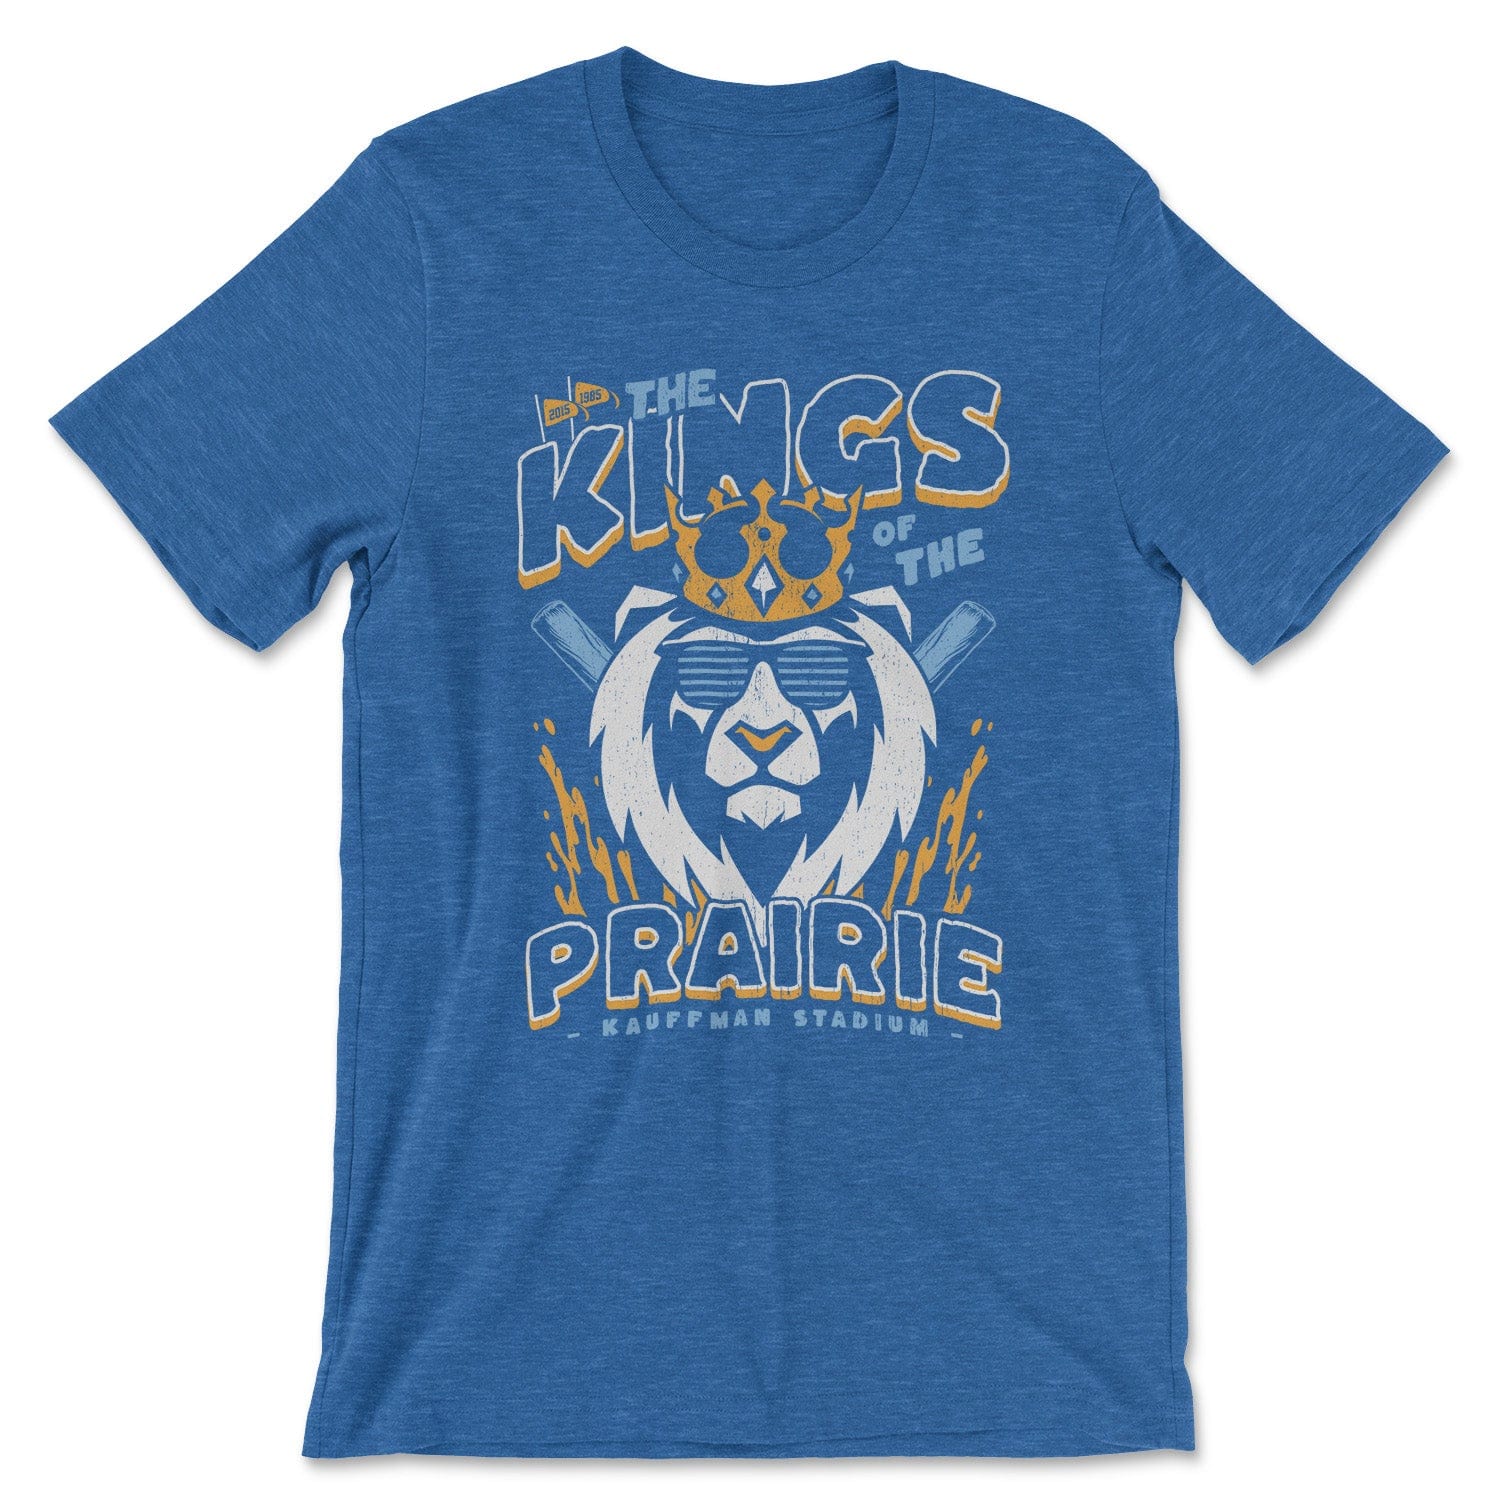 KC Swag Kansas City Royals blue, powder, gold, white PRAIRIE KINGS on heather royal blue unisex t-shirt 